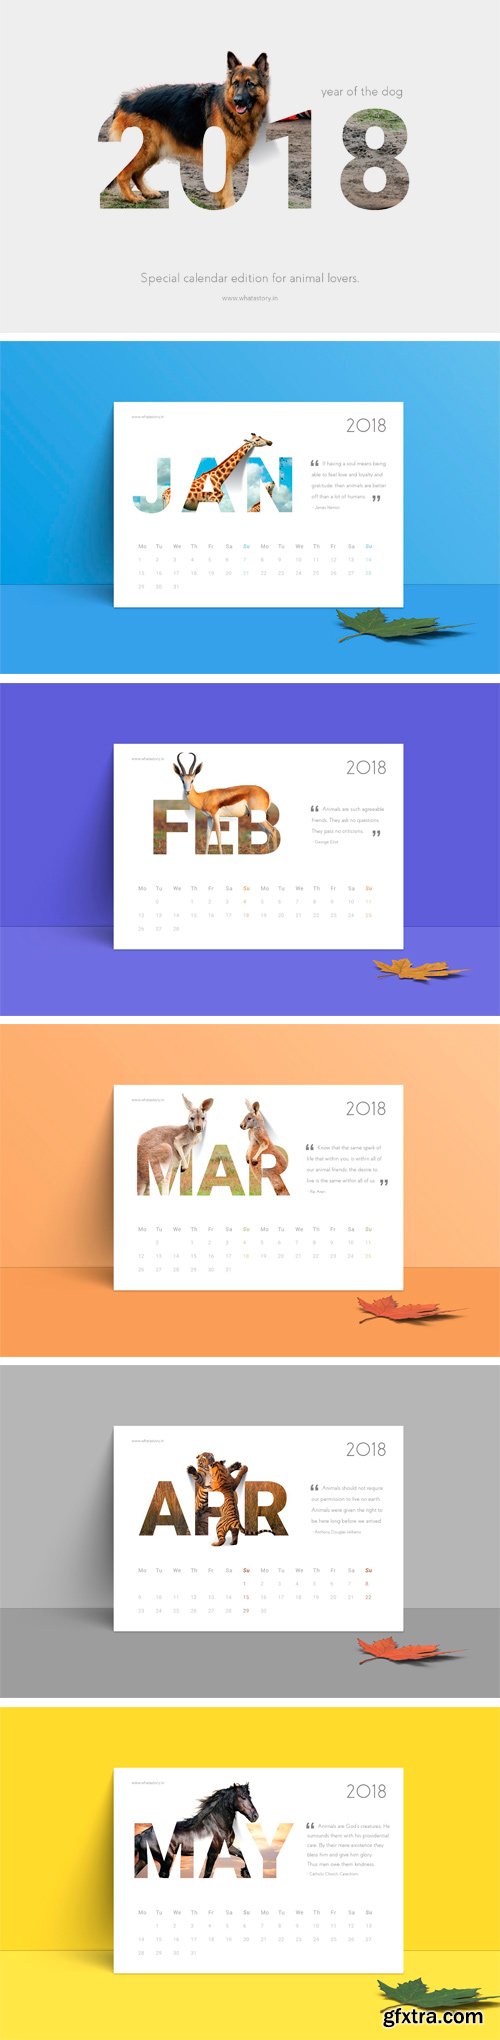 CM - 2018 Calendar | Animals 2009222